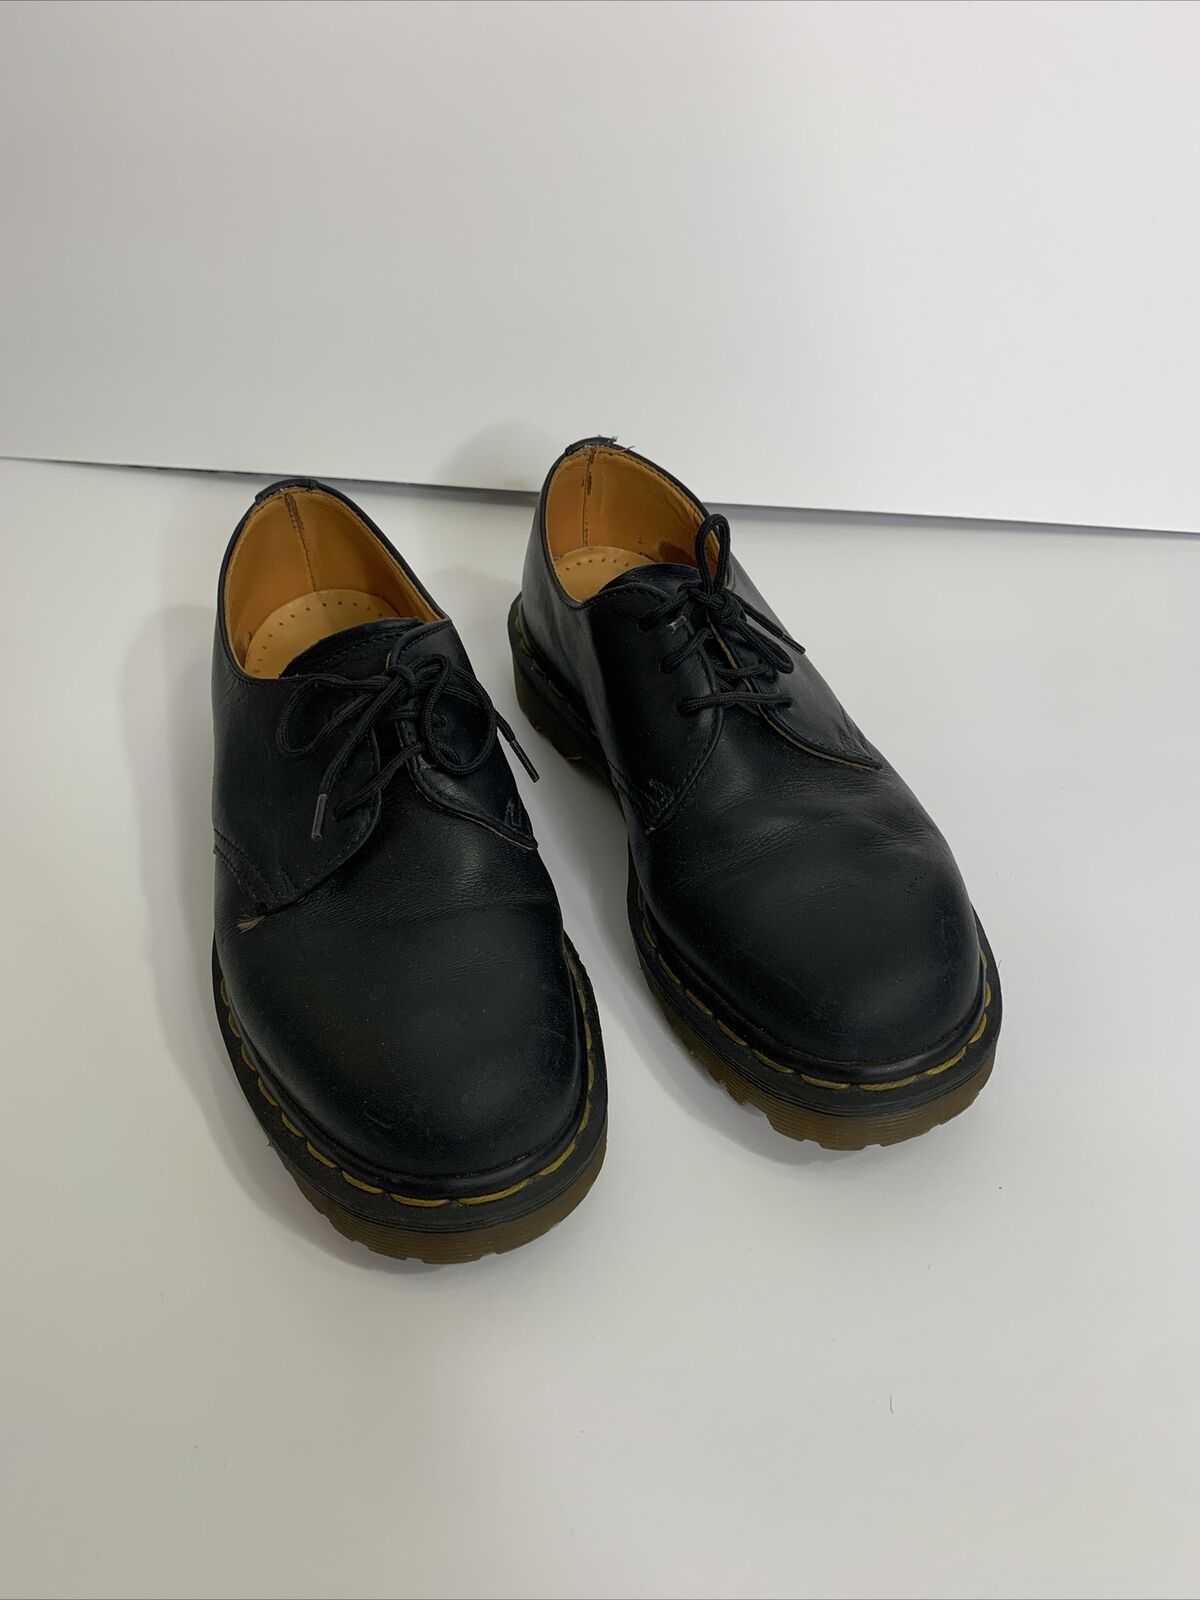 dr martens youth size 4 black loafer oxford shoes